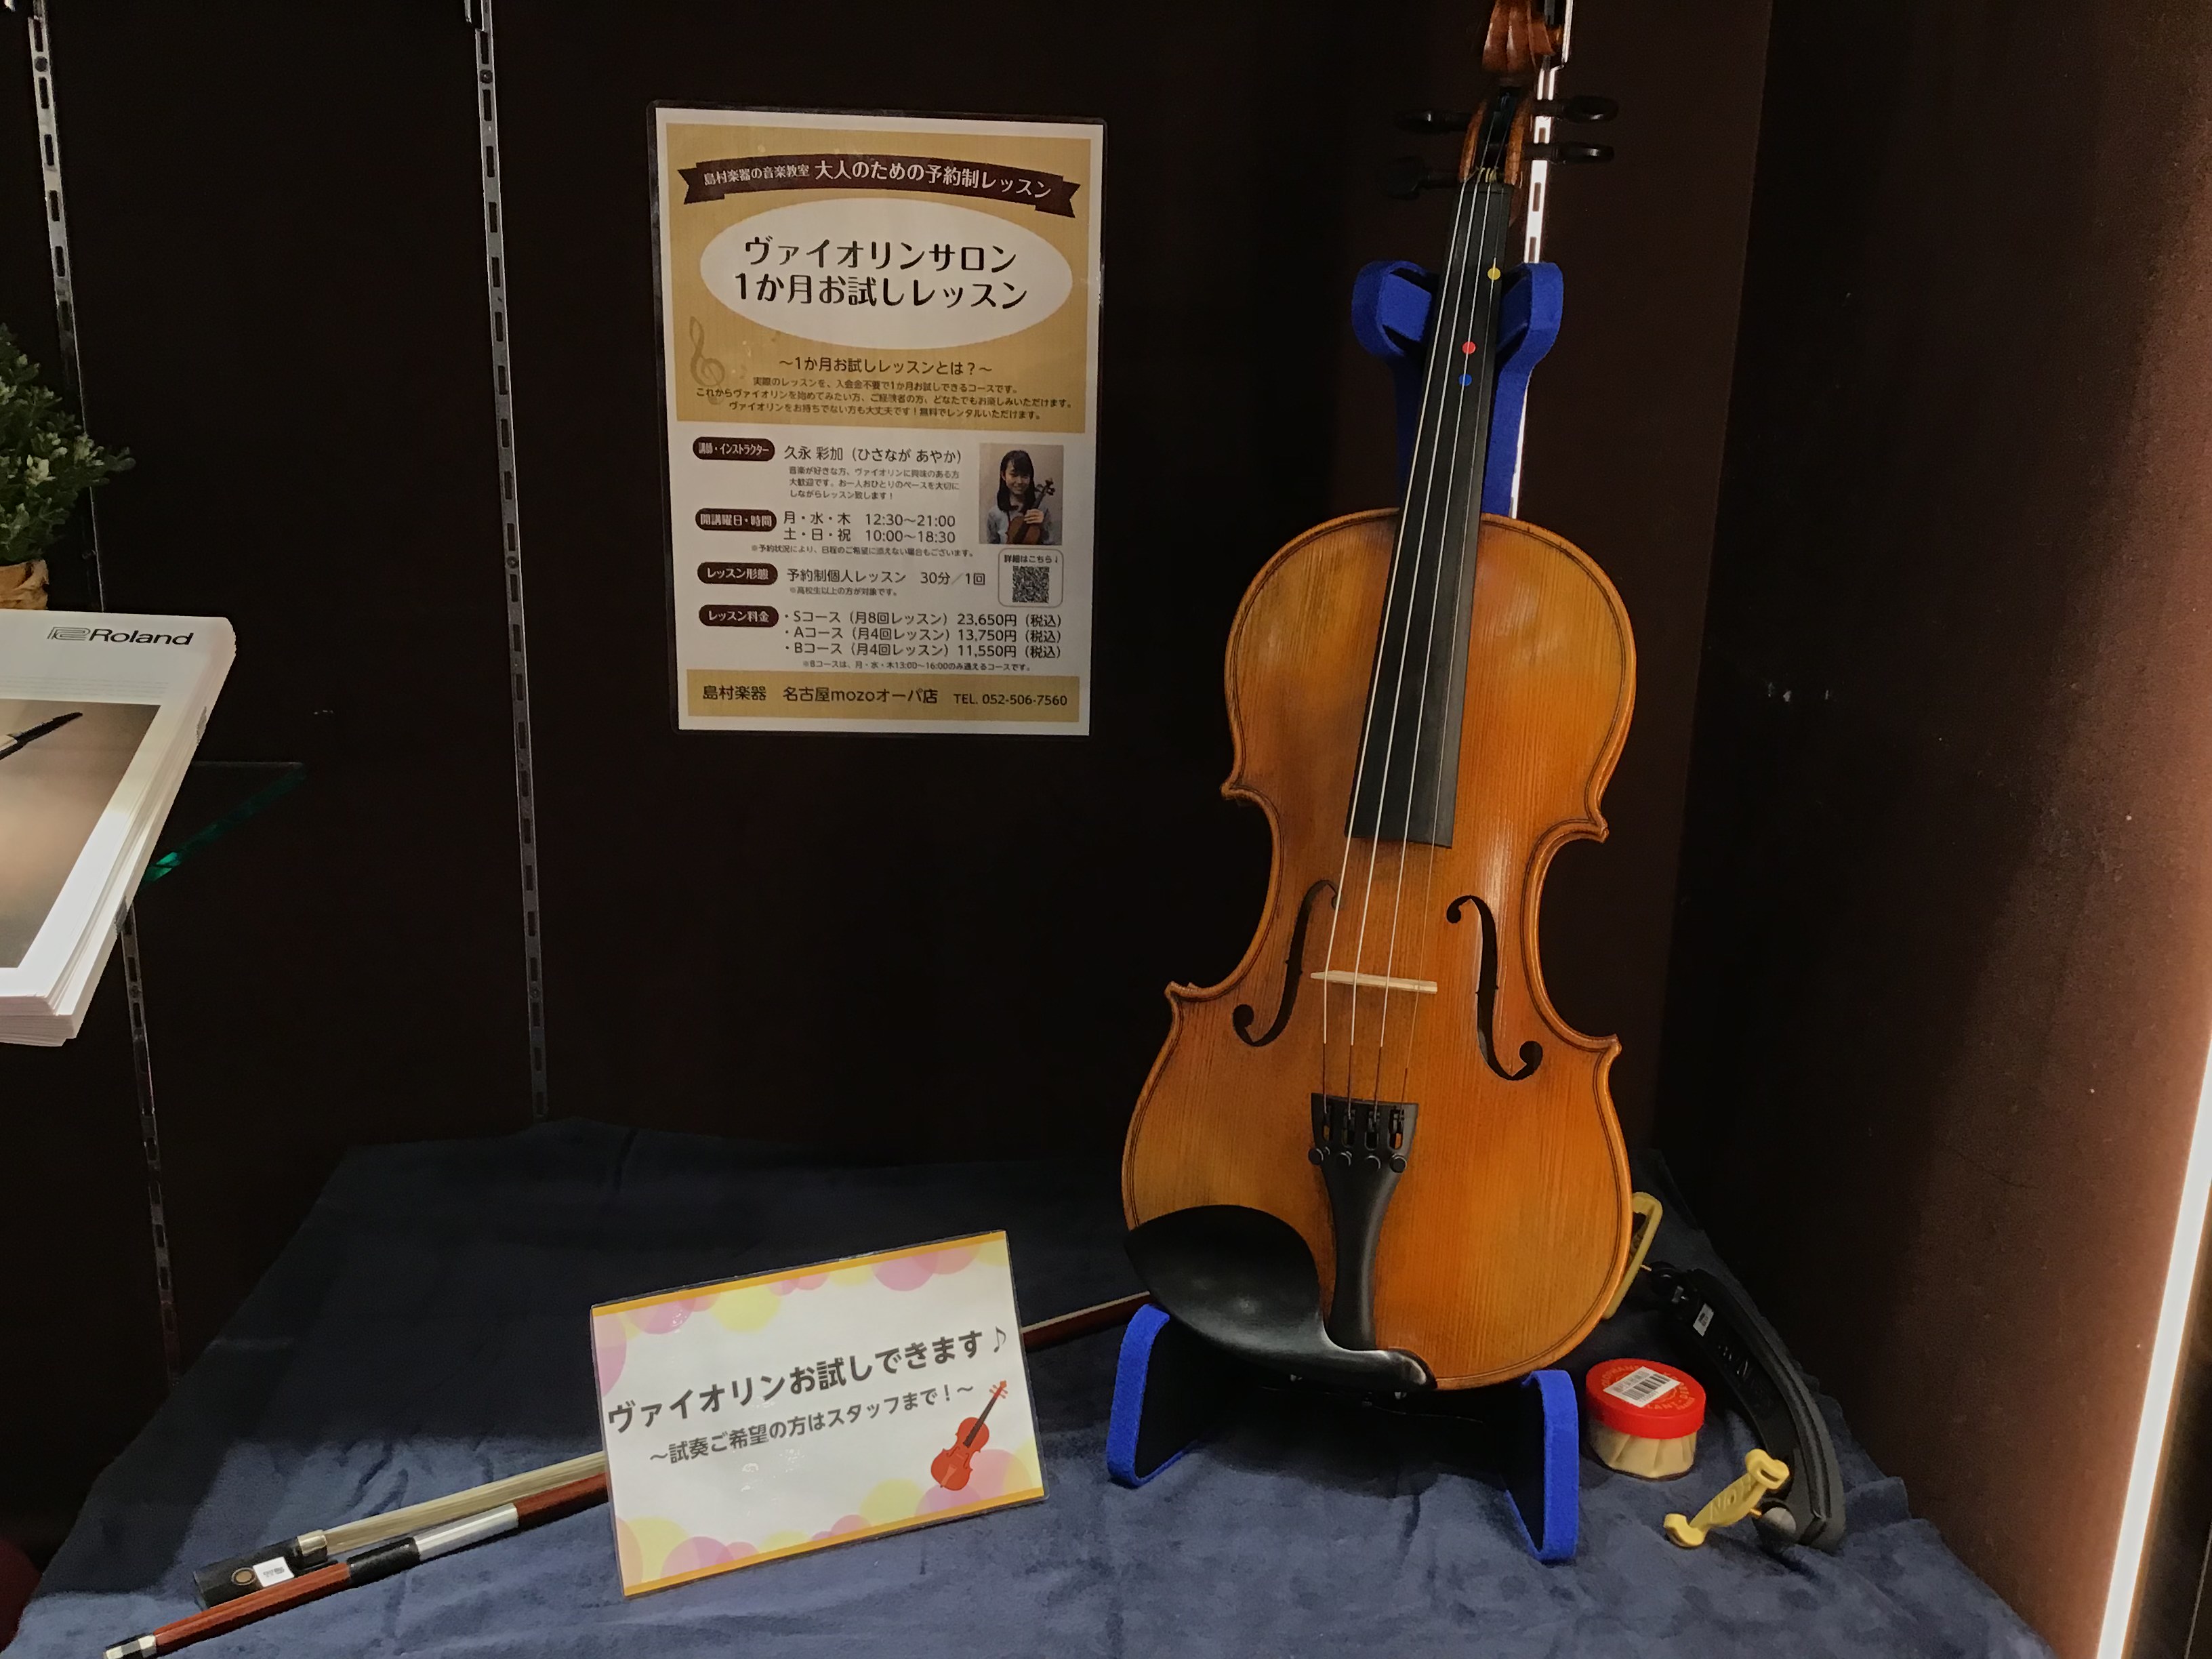 CONTENTSバイオリンをもっと身近に！楽器体験コーナーを展開しましたLet’s Try！きらきら星を弾いてみよう☆ヴァイオリンサロンのご案内お問い合わせバイオリンをもっと身近に！楽器体験コーナーを展開しました こんにちは！ヴァイオリンインストラクターの久永です。 「憧れはあるけれどなかなか触る機 […]